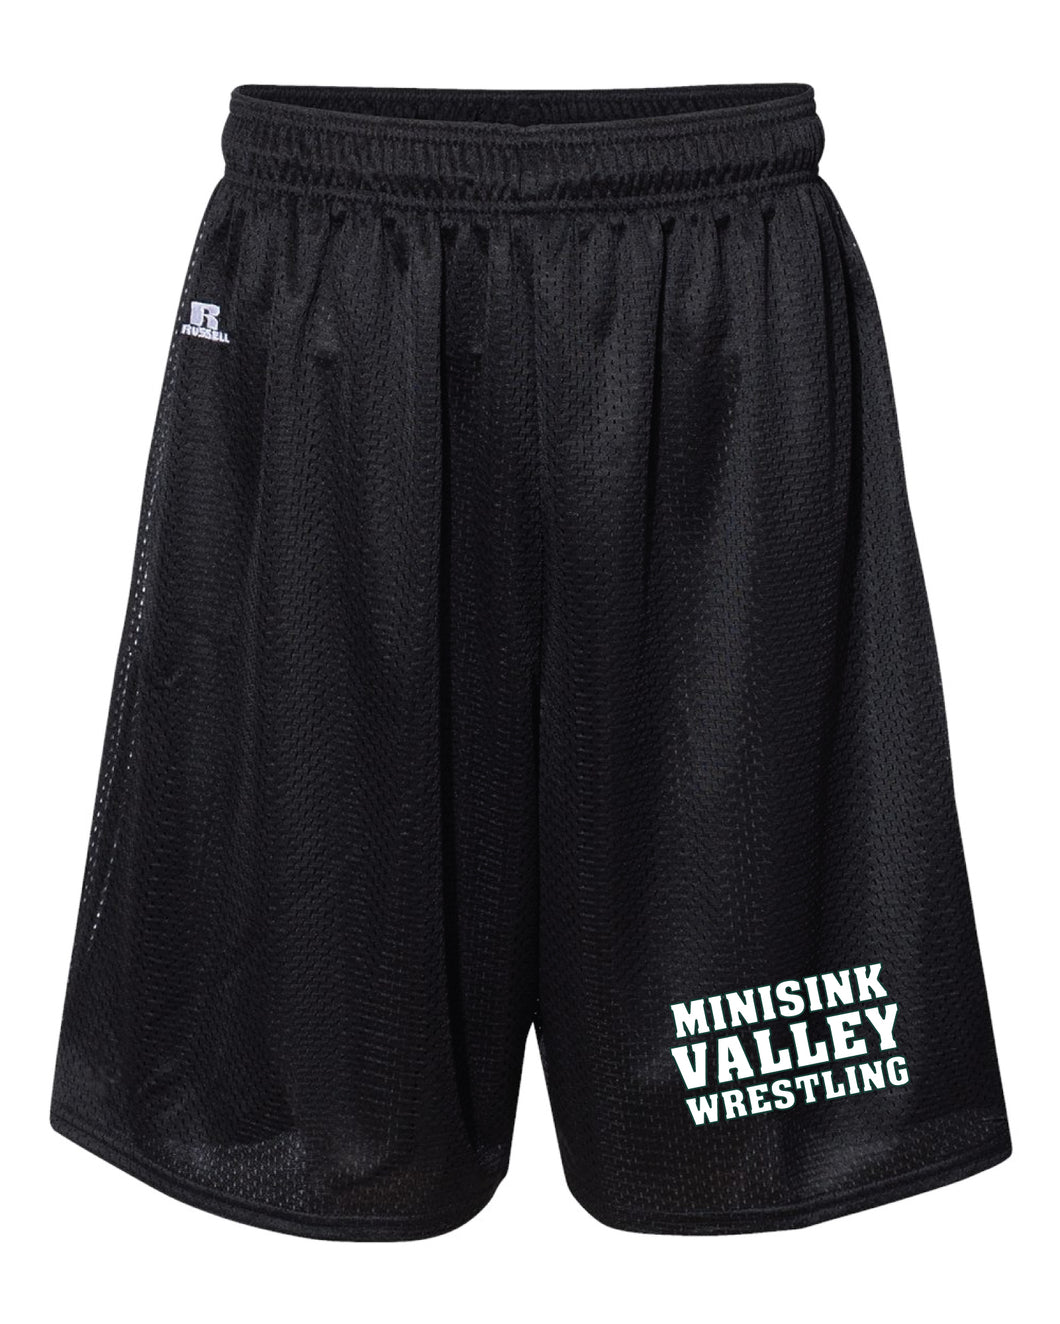 Minisink Valley Wrestling Russell Athletic Tech Shorts - Black - 5KounT